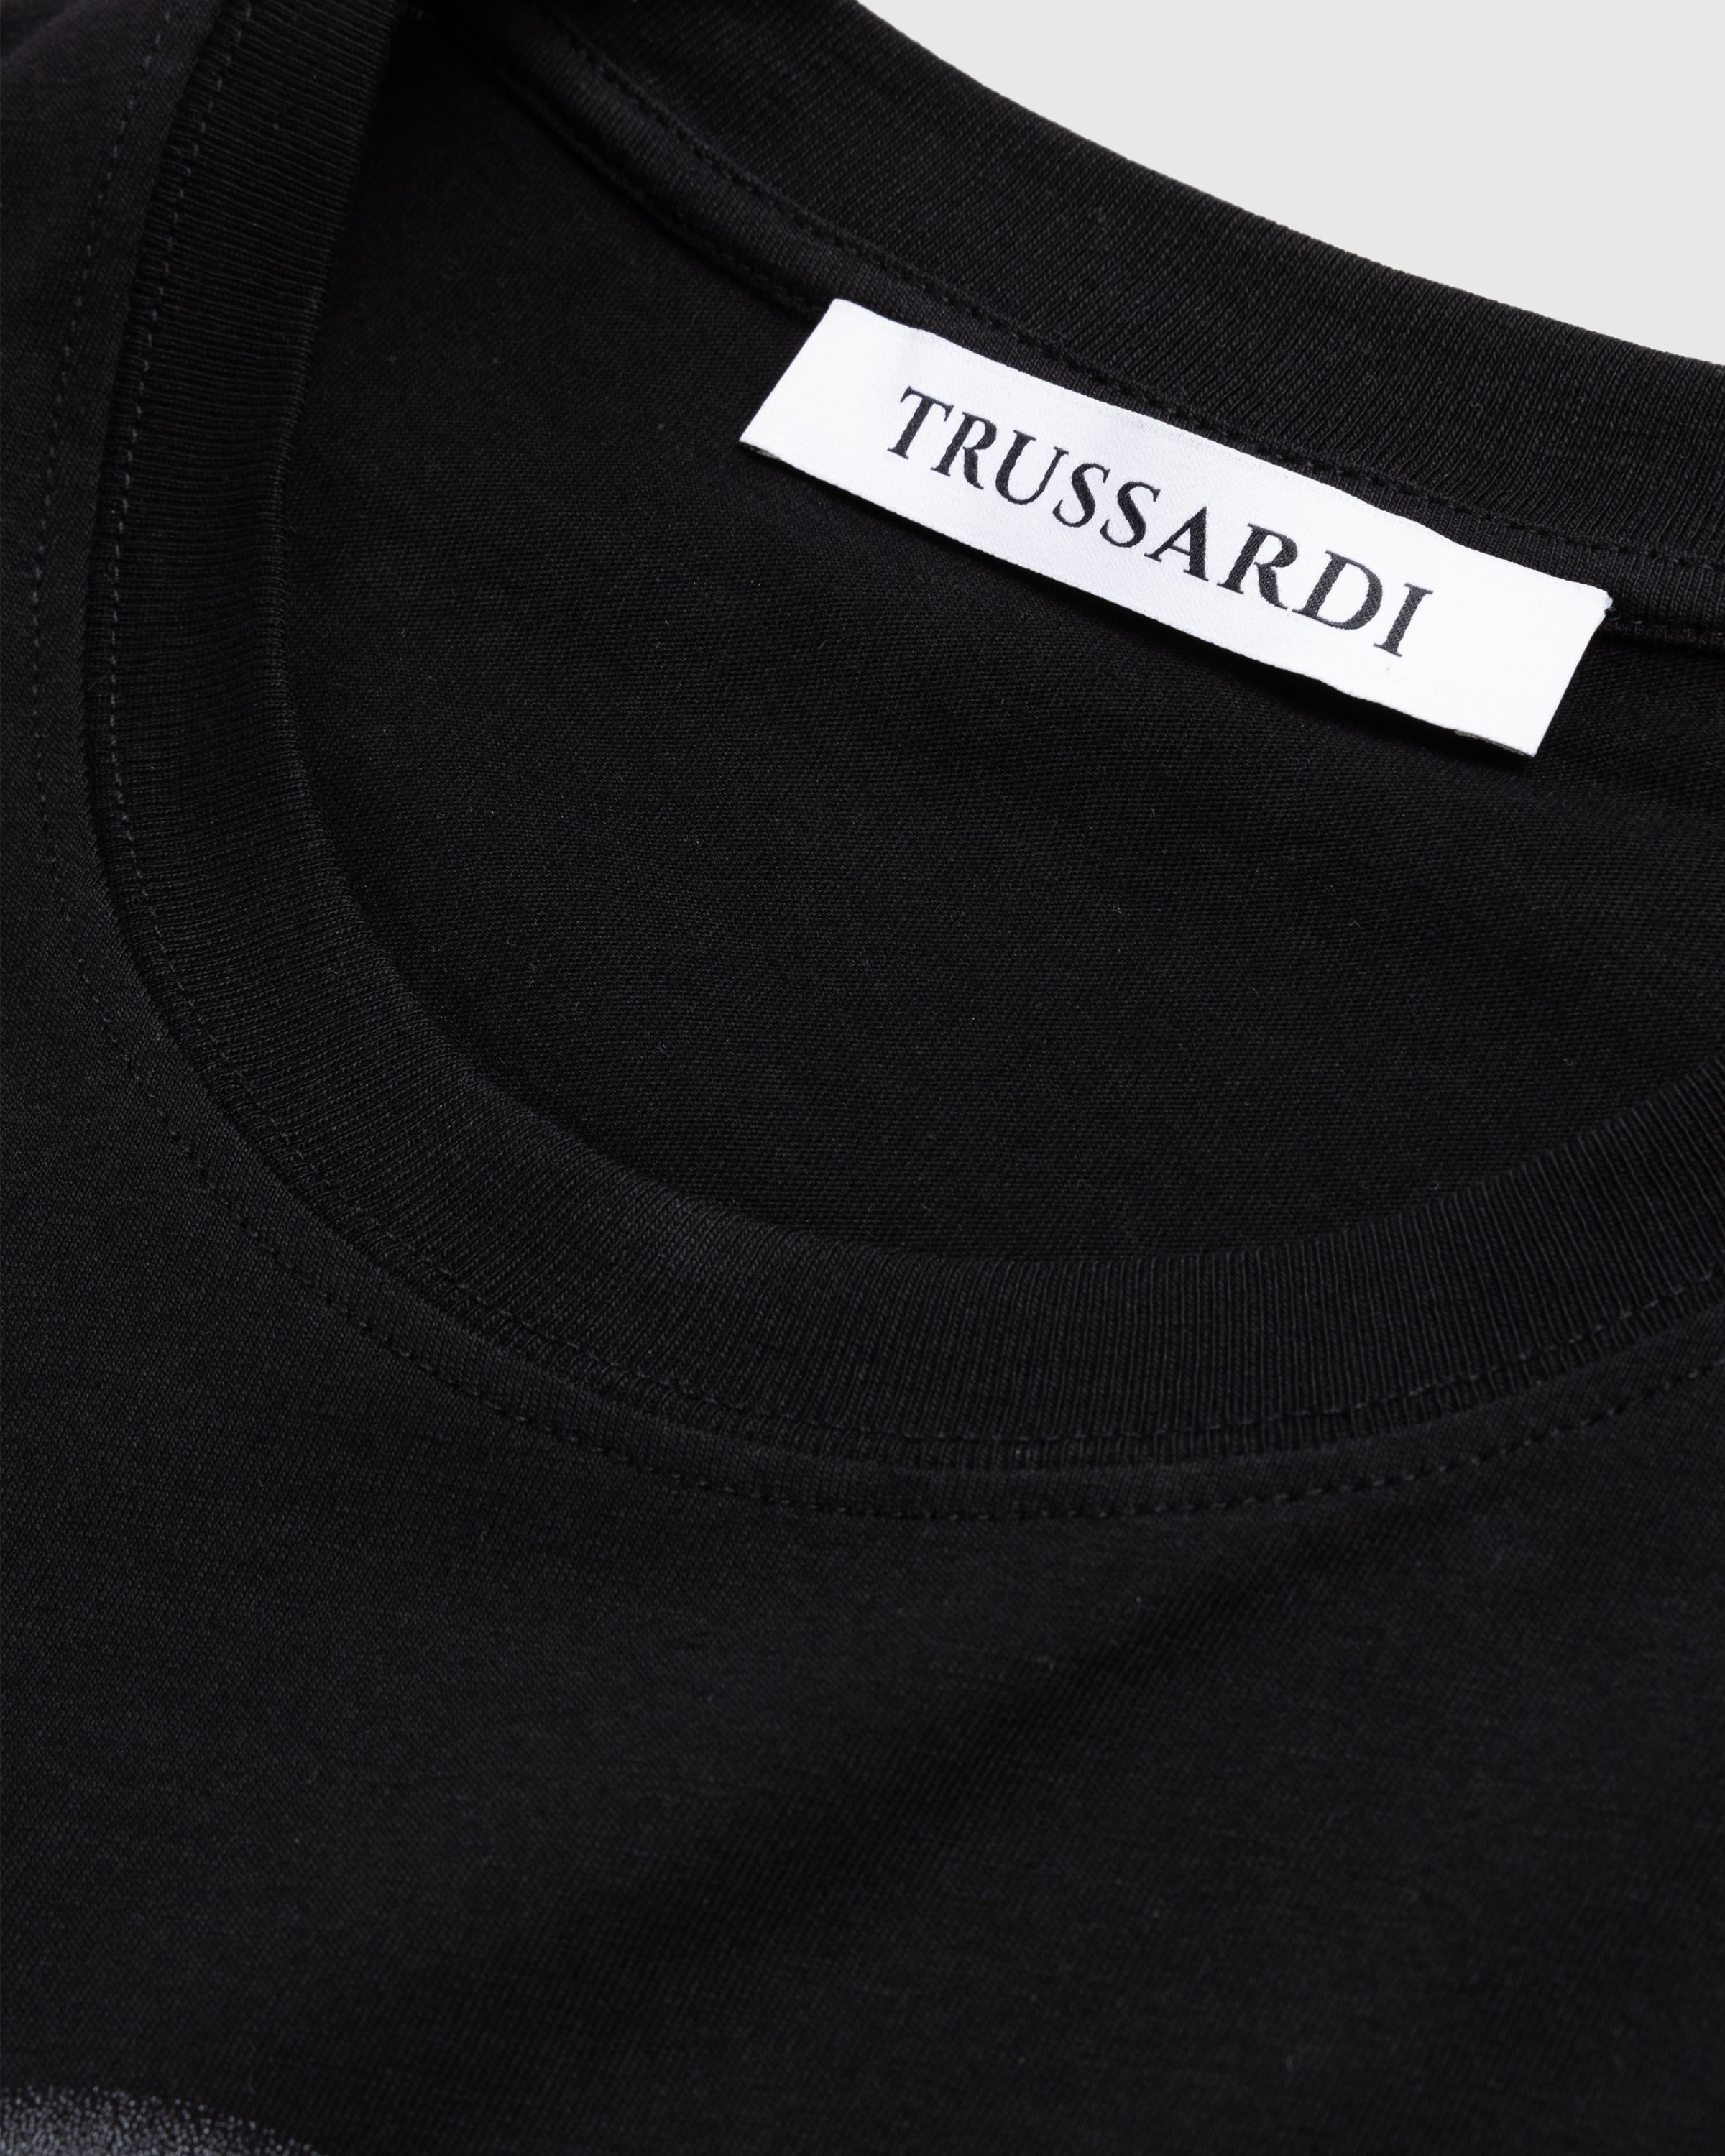 Trussardi - T-Shirt Greyhound Print Cotton Jersey 30/1 - Clothing - Black - Image 5